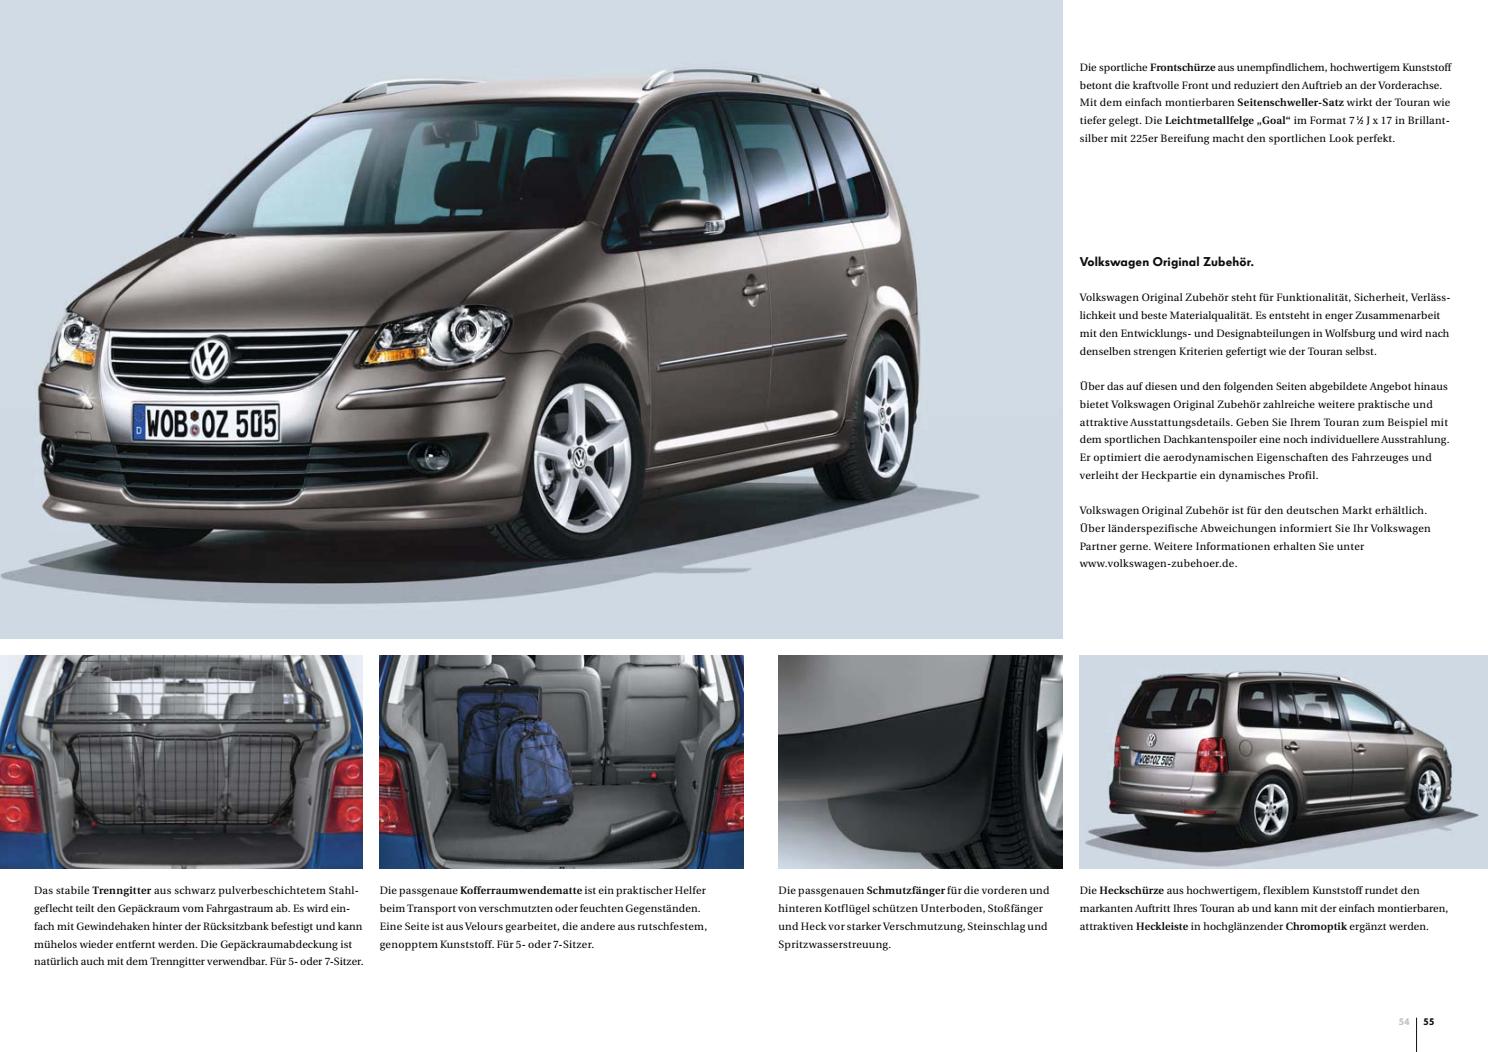  VW Archives - 2007 VW Touran Sales Brochure - German